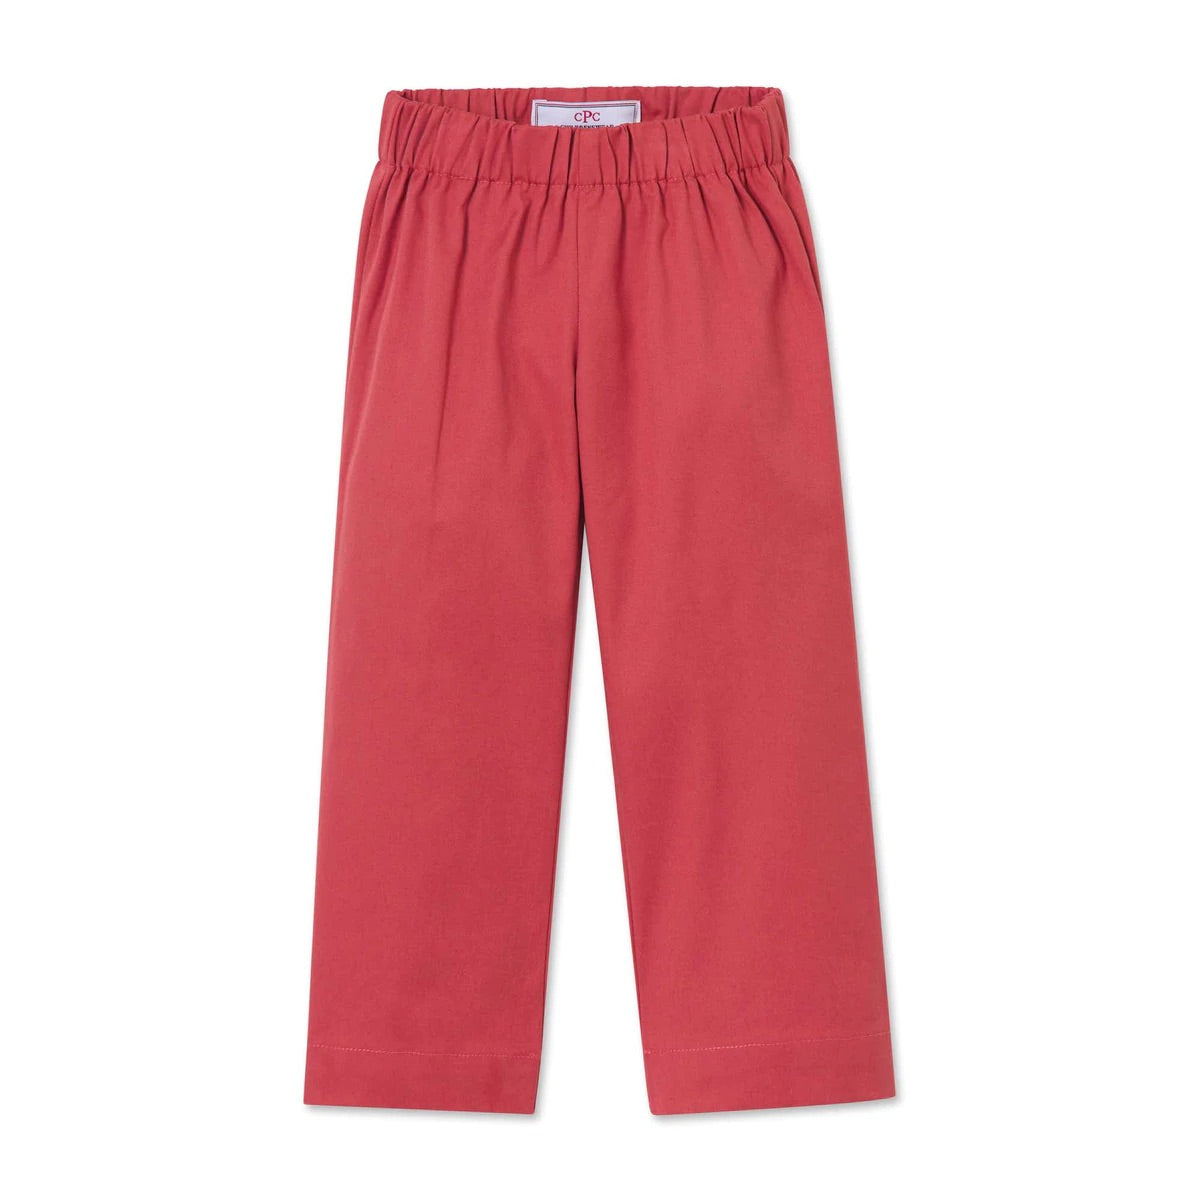 Women's Red Monogram Jogging Pants In Technical Cotton